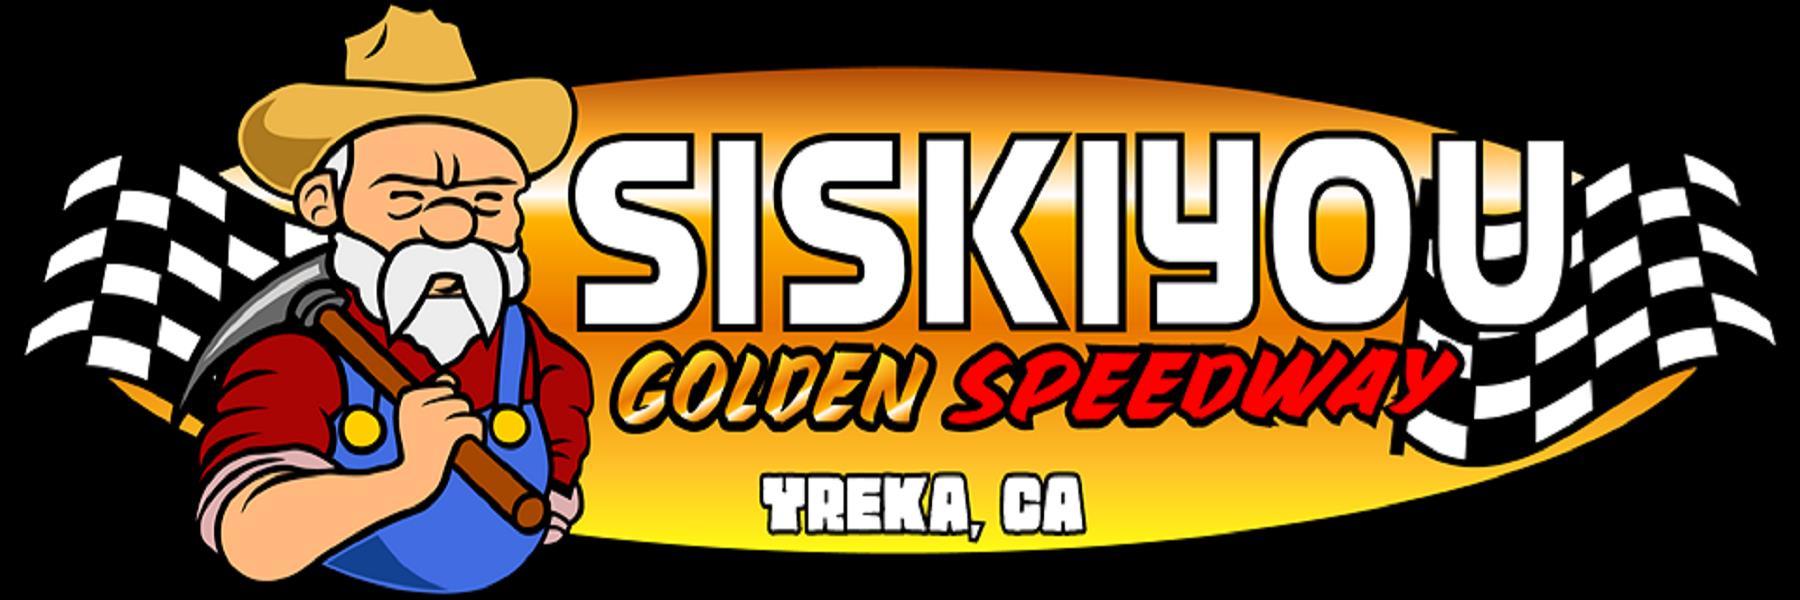 9/11/2021 - Siskiyou Golden Speedway